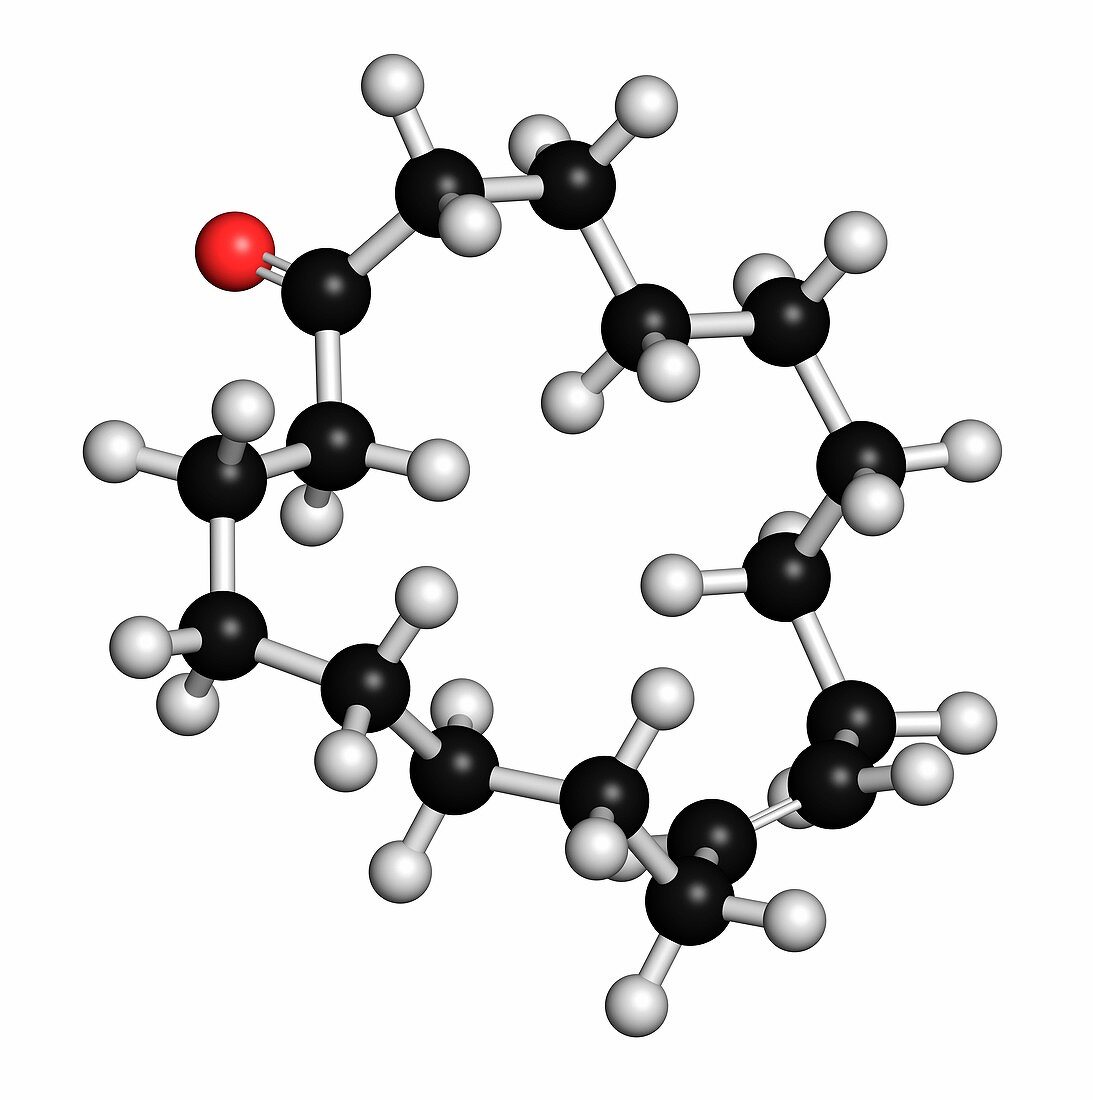 Civetone pheromone molecule, illustration